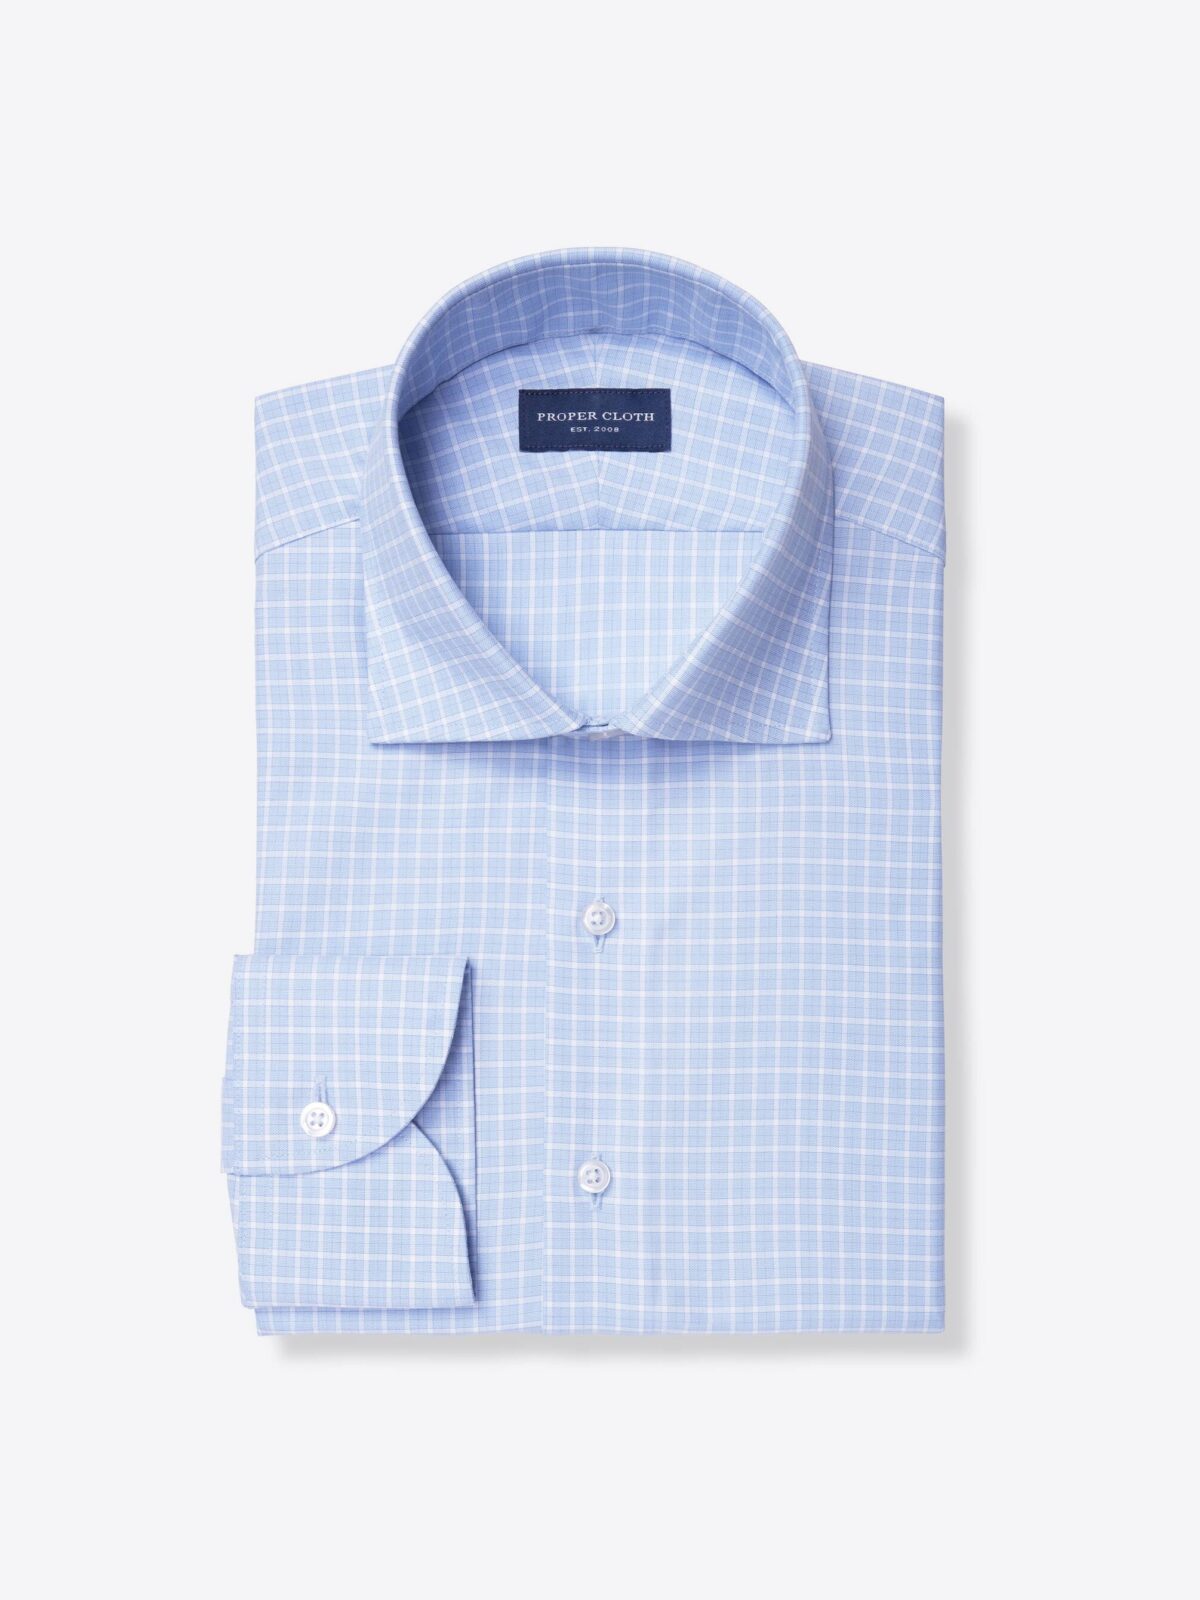 Thomas Mason WR Light Blue Small Check Shirt by Proper Cloth